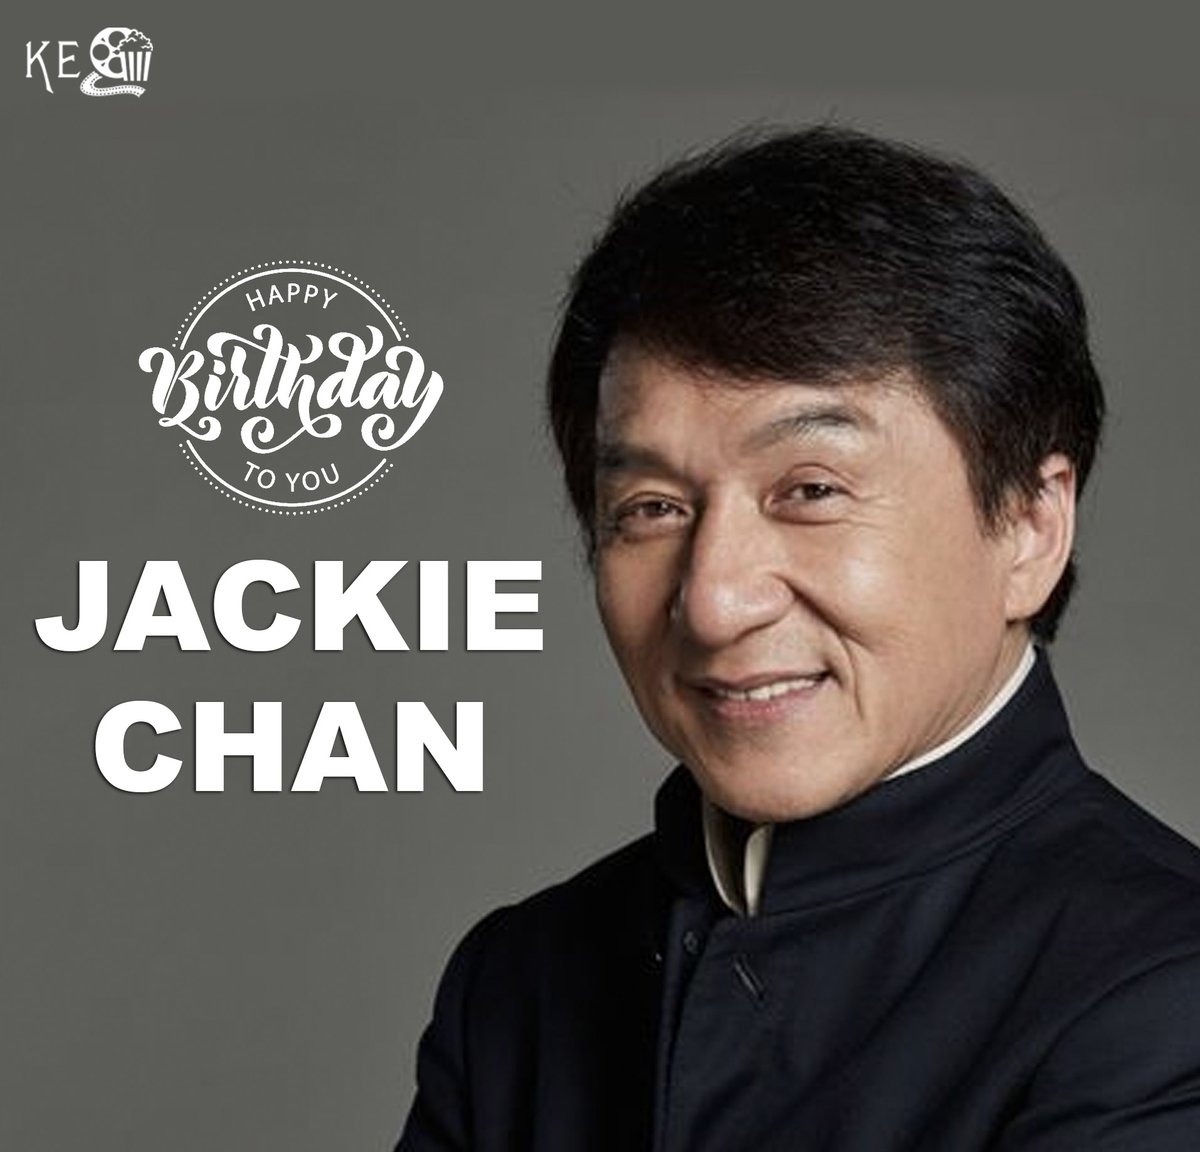 Wishing Jackie Chan Very HappyBirthday #HappybirthdayJackiechan #HBDJackiechan #Jackiechan #Khafaentertainment